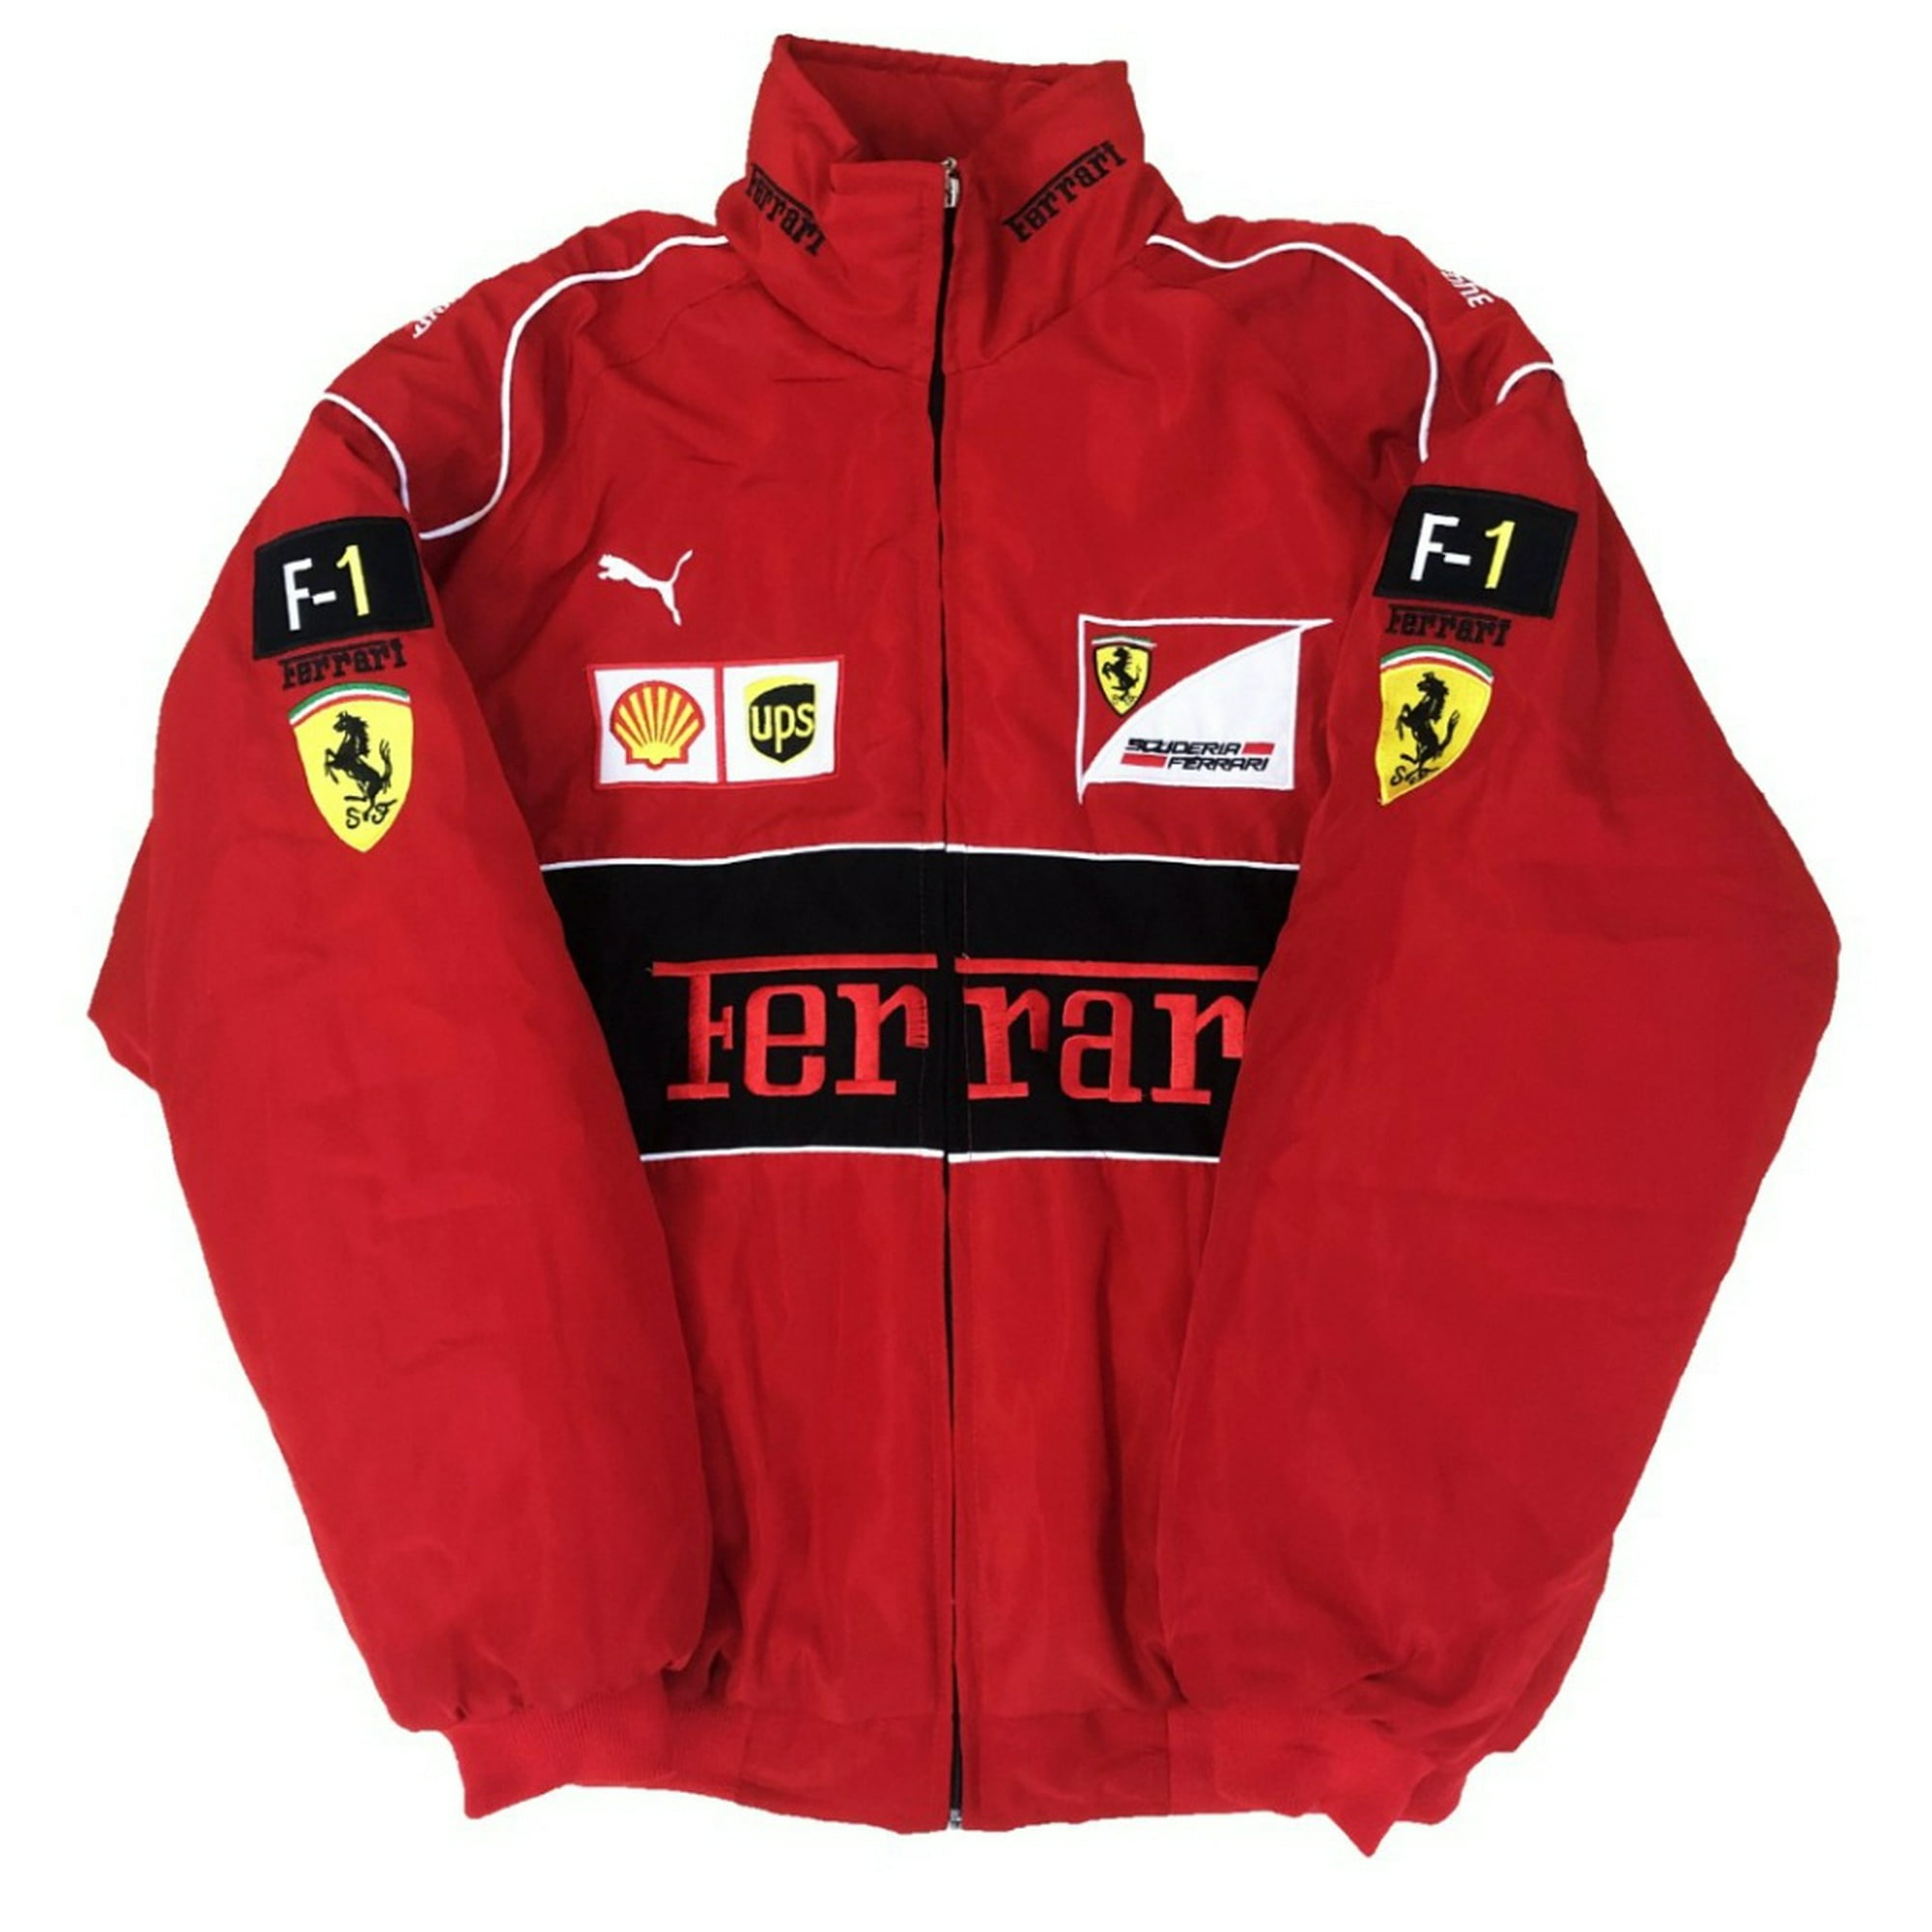 Chaqueta Ferrari F1 - Chaquetas - AliExpress